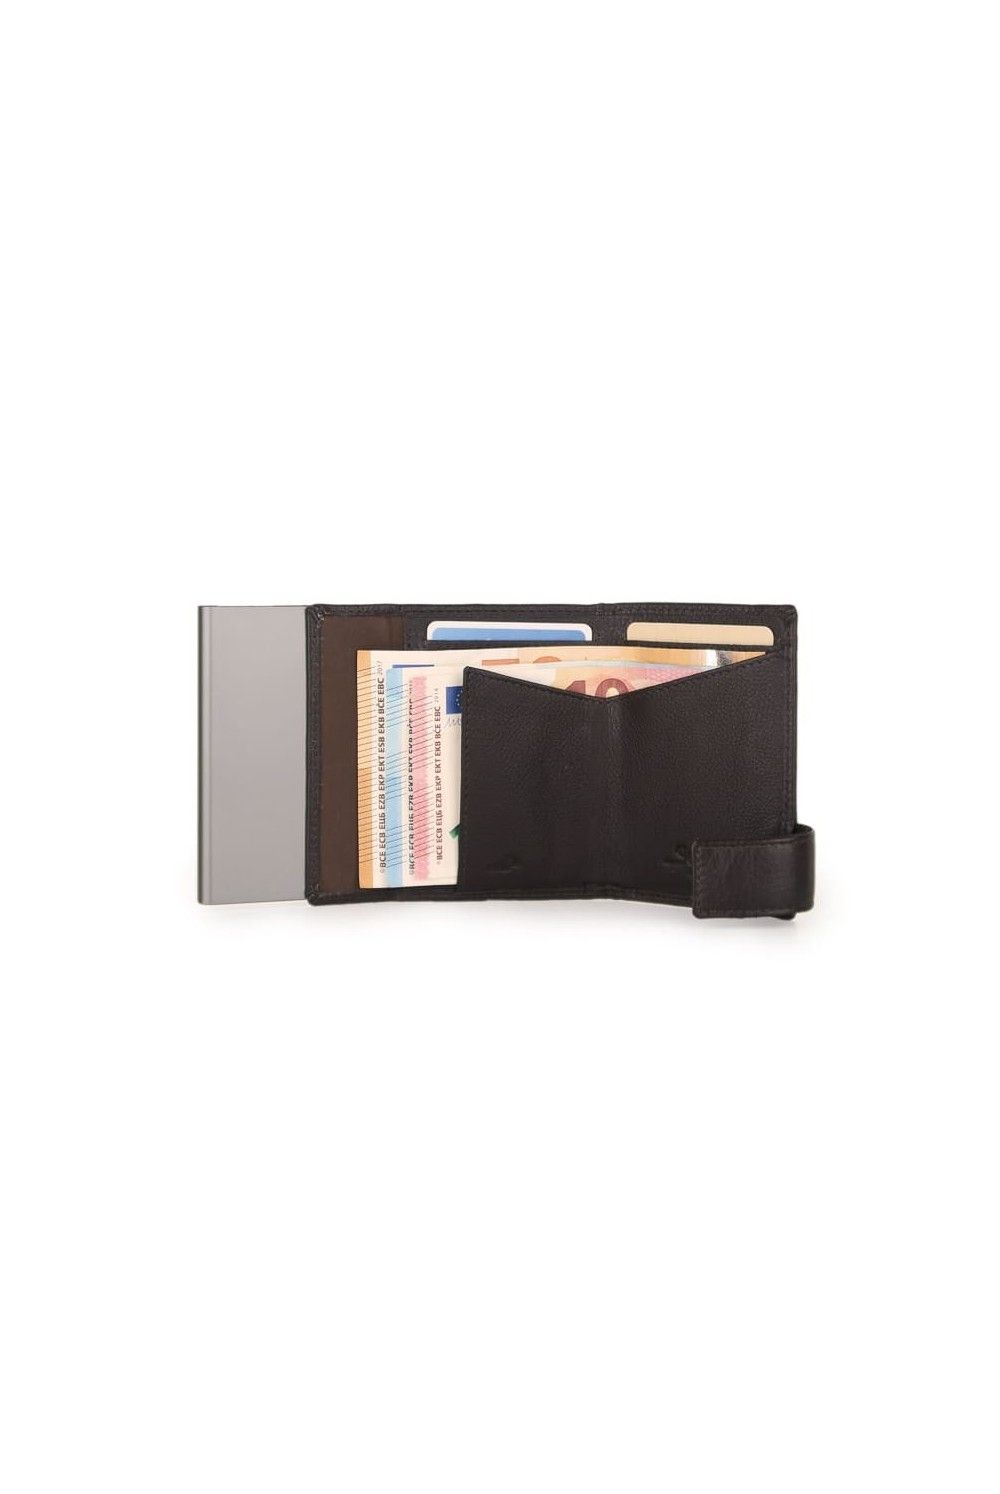 SecWal Card Case RV Leather dark Brown